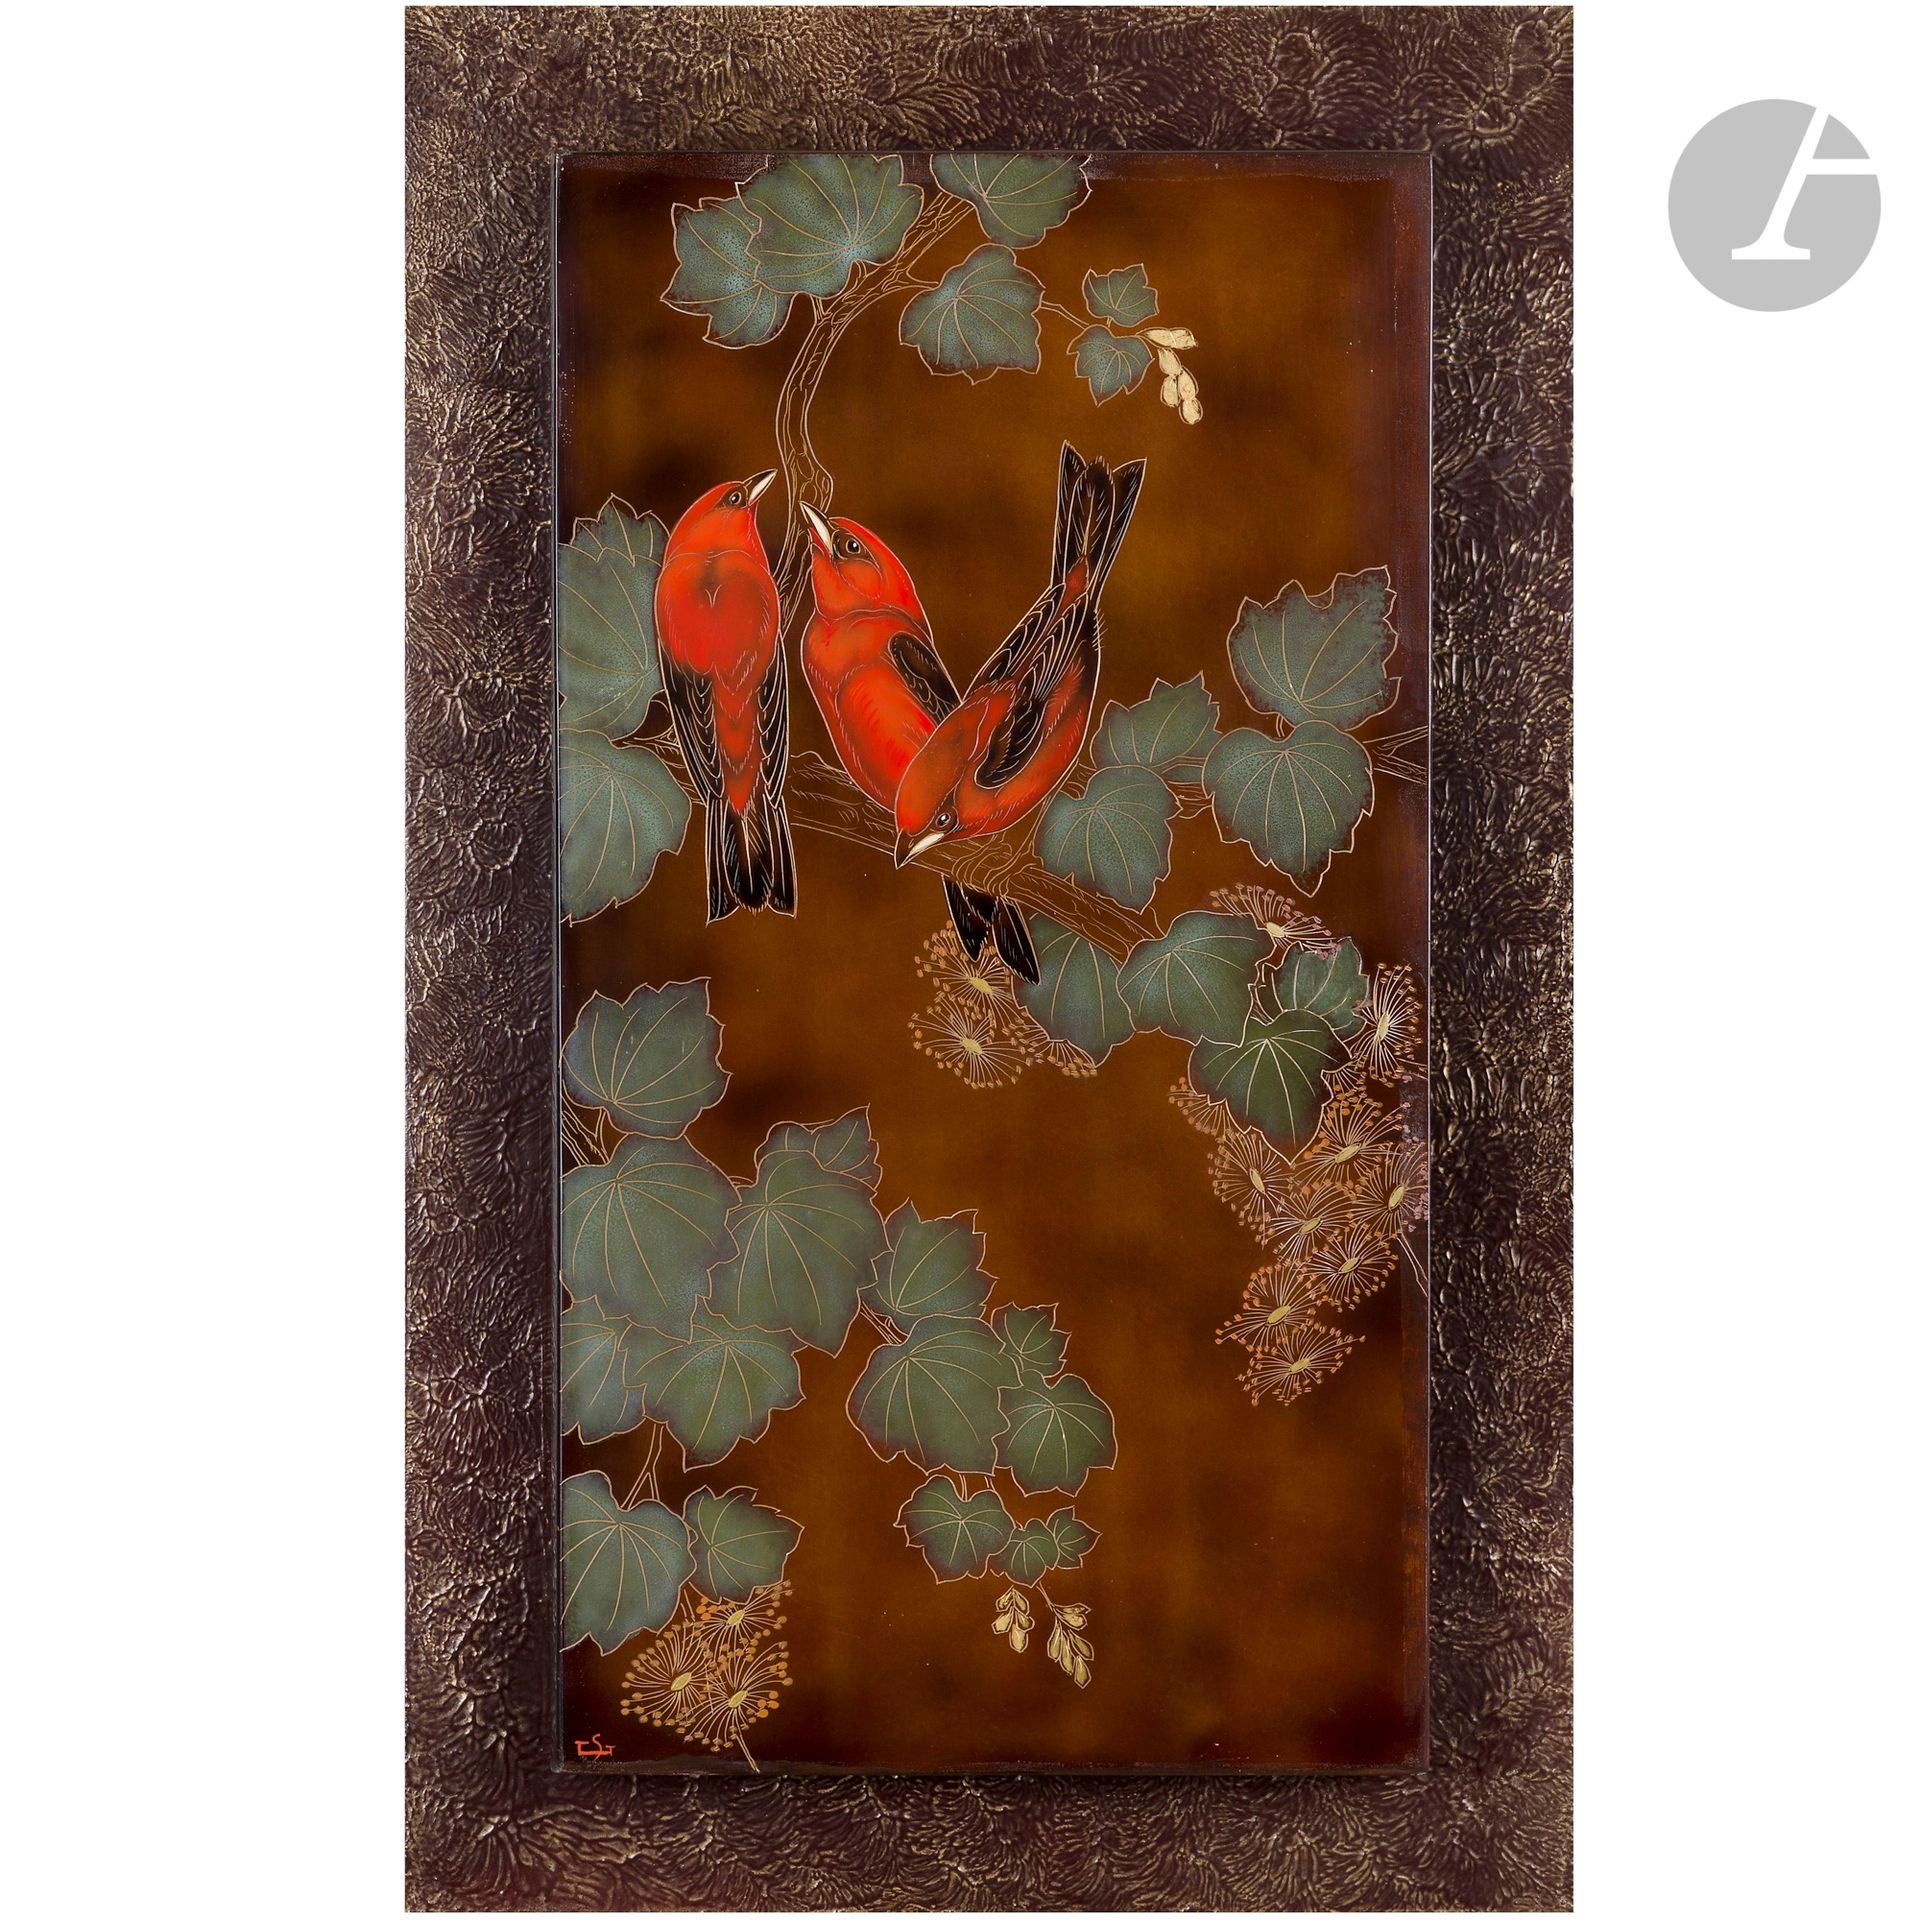 Null GASTON SUISSE (1896-1988)
Drei trendige Tangaras
Dekoratives Paneel mit Ori&hellip;